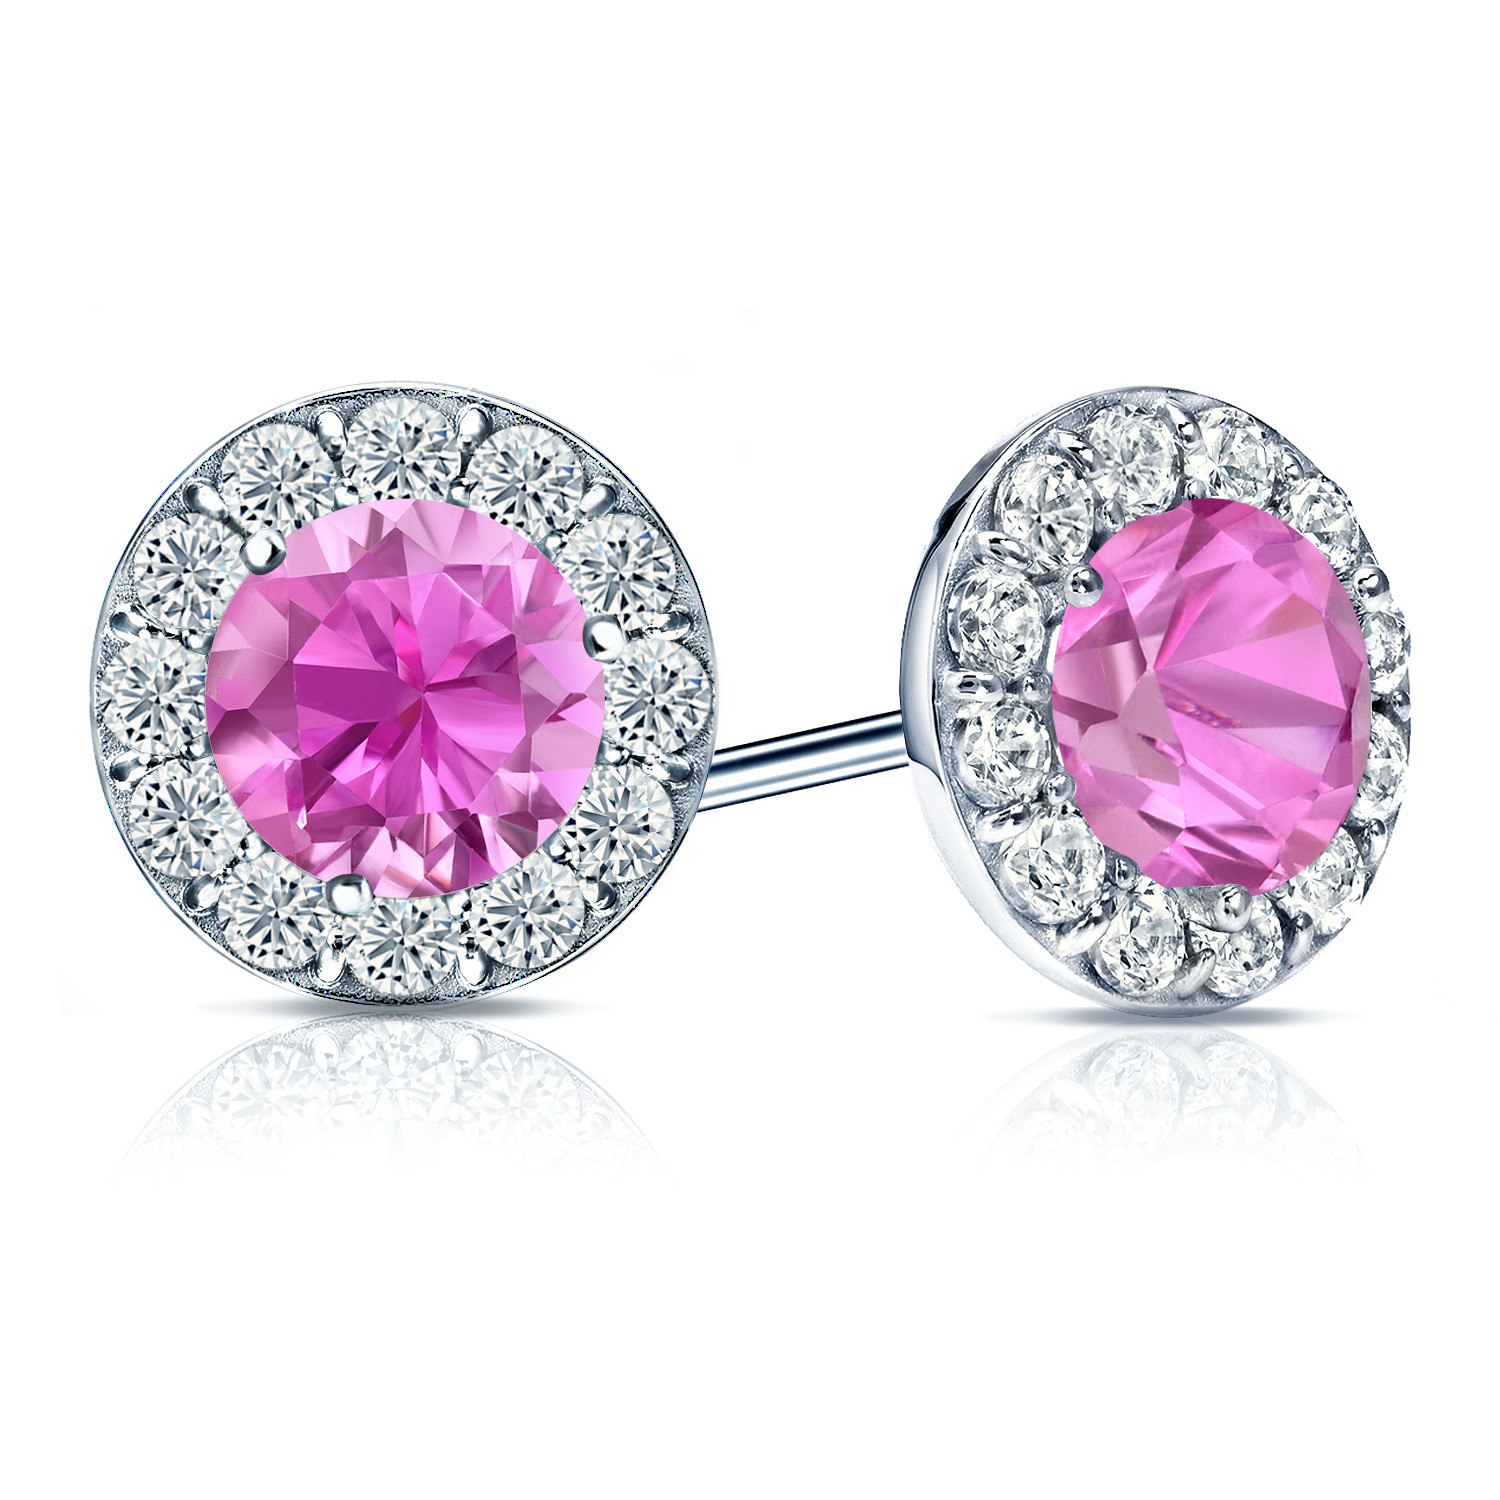 Pink Stud Earrings
 Certified 0 50 cttw Round Pink Sapphire Gemstone Stud